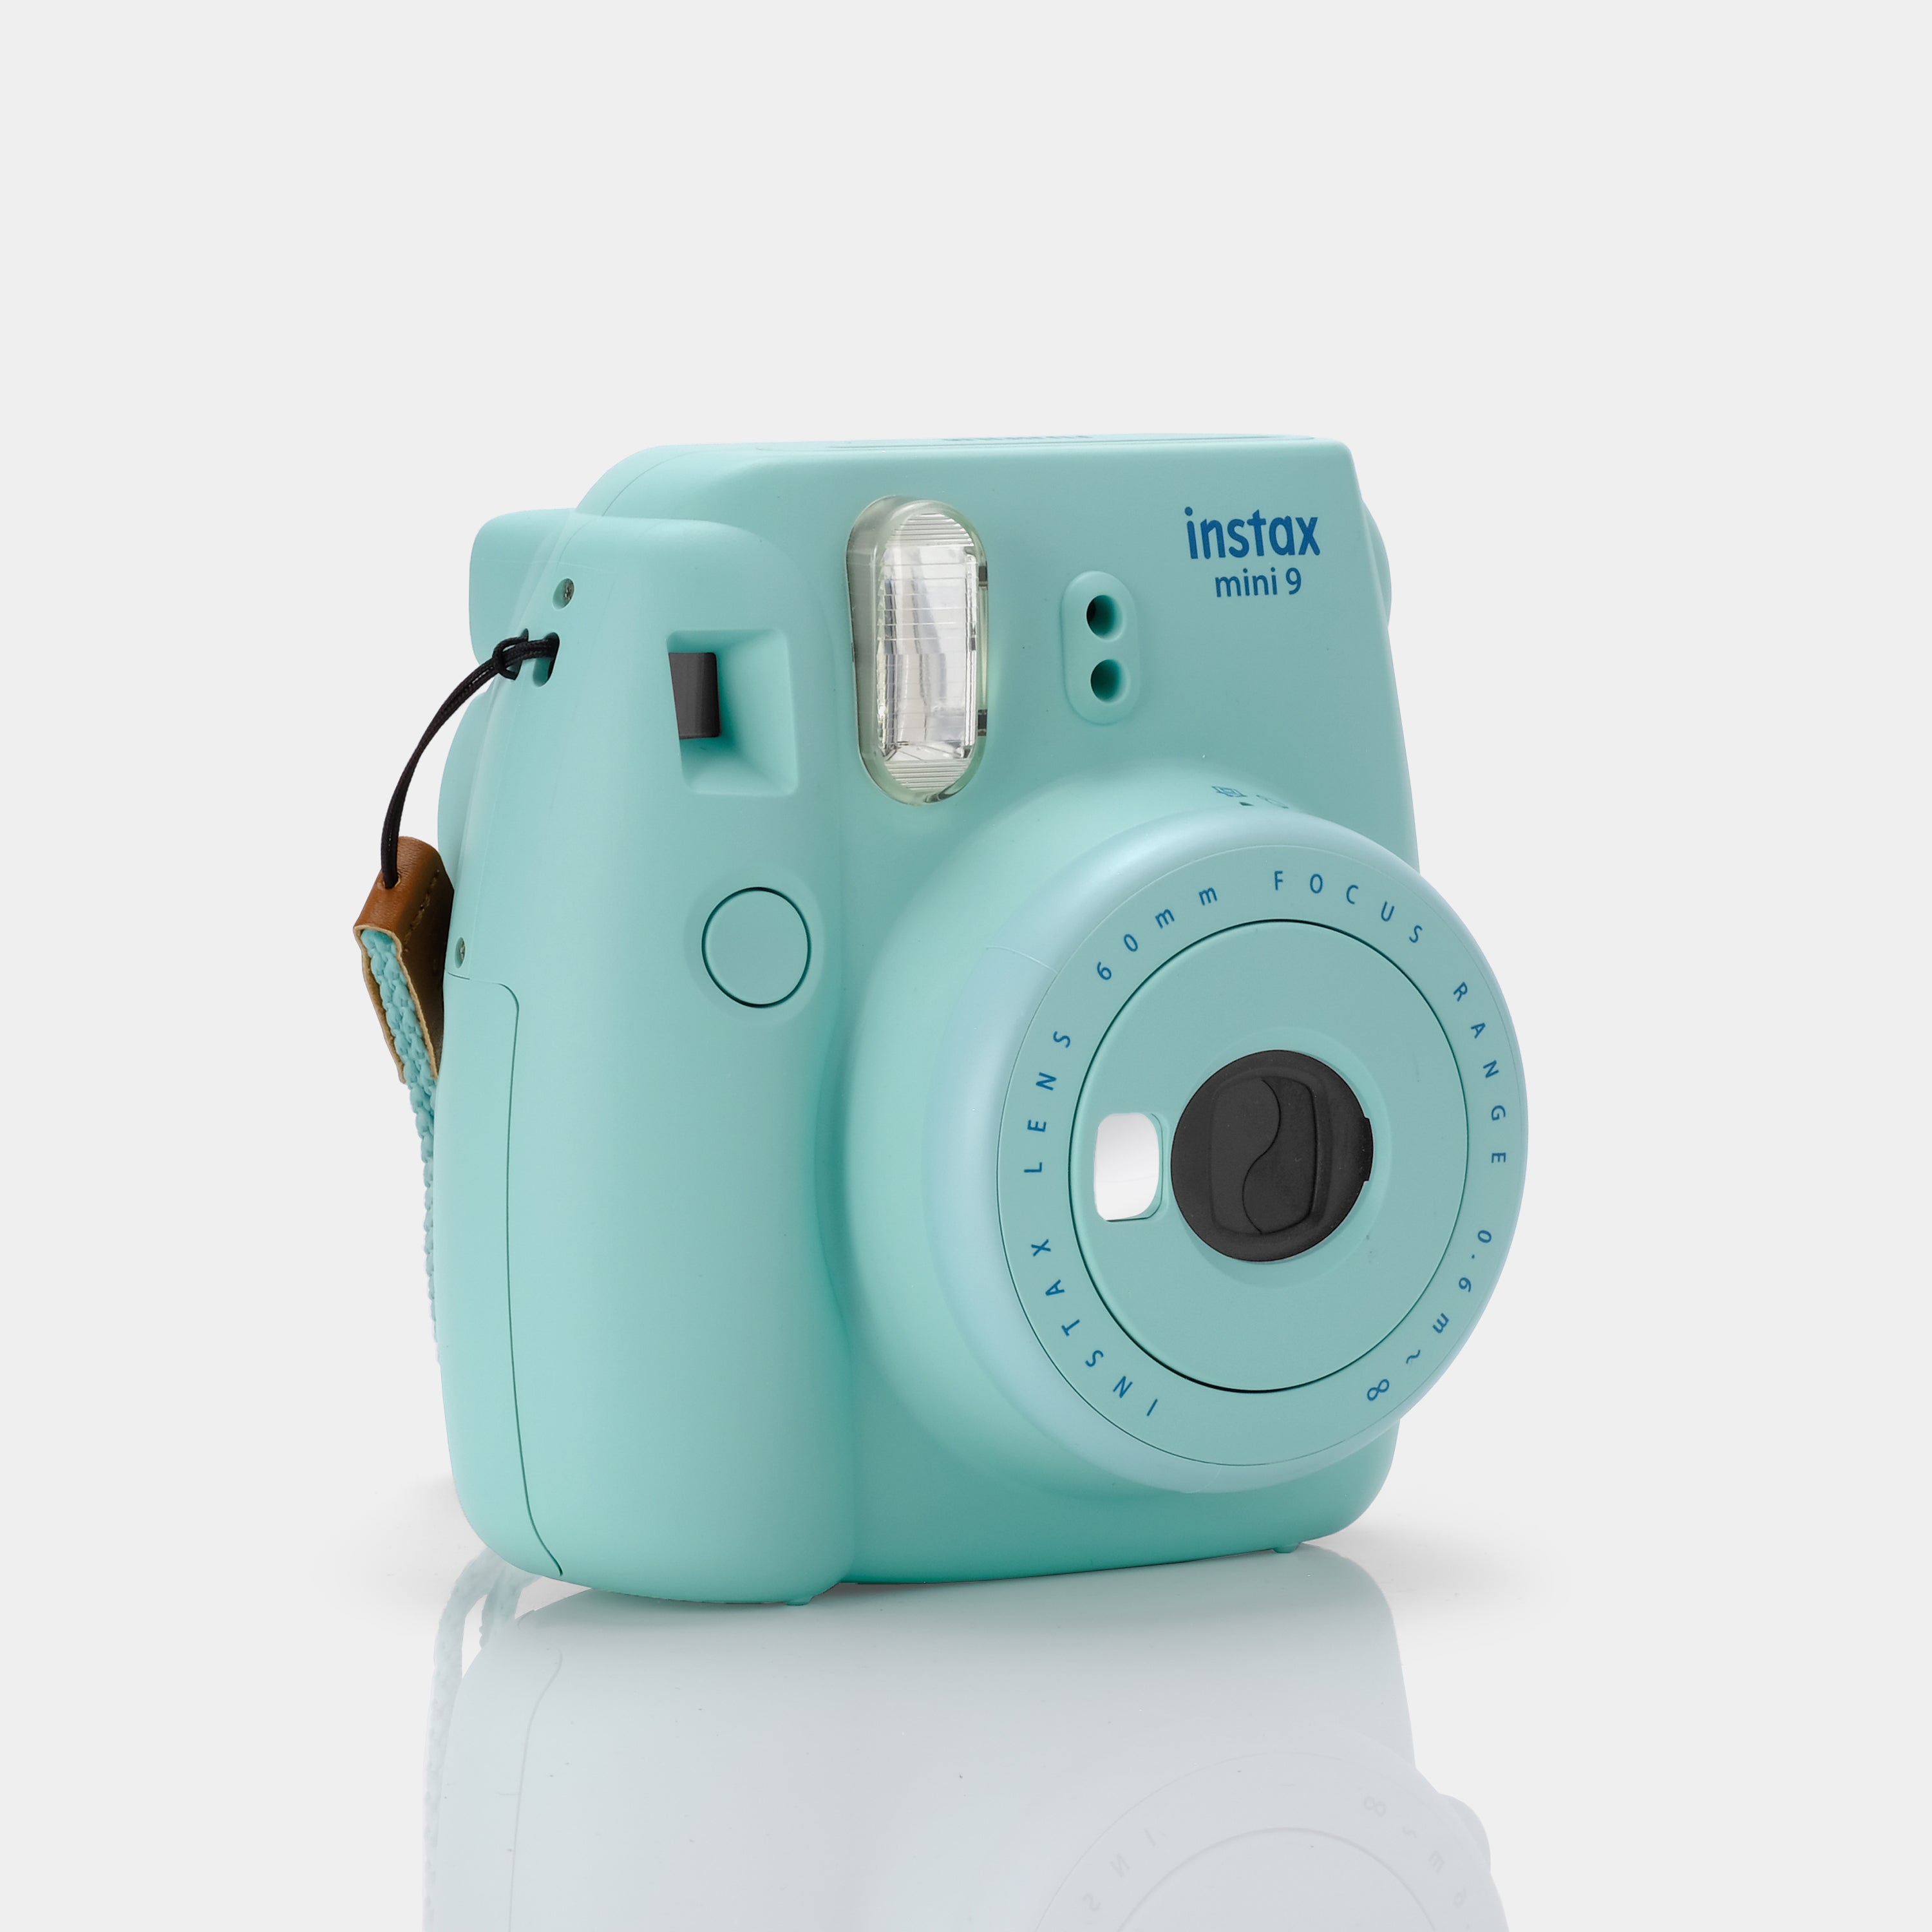 Fujifilm Instax Mini 9 Teal Instant Film Camera With White Bag - Refur